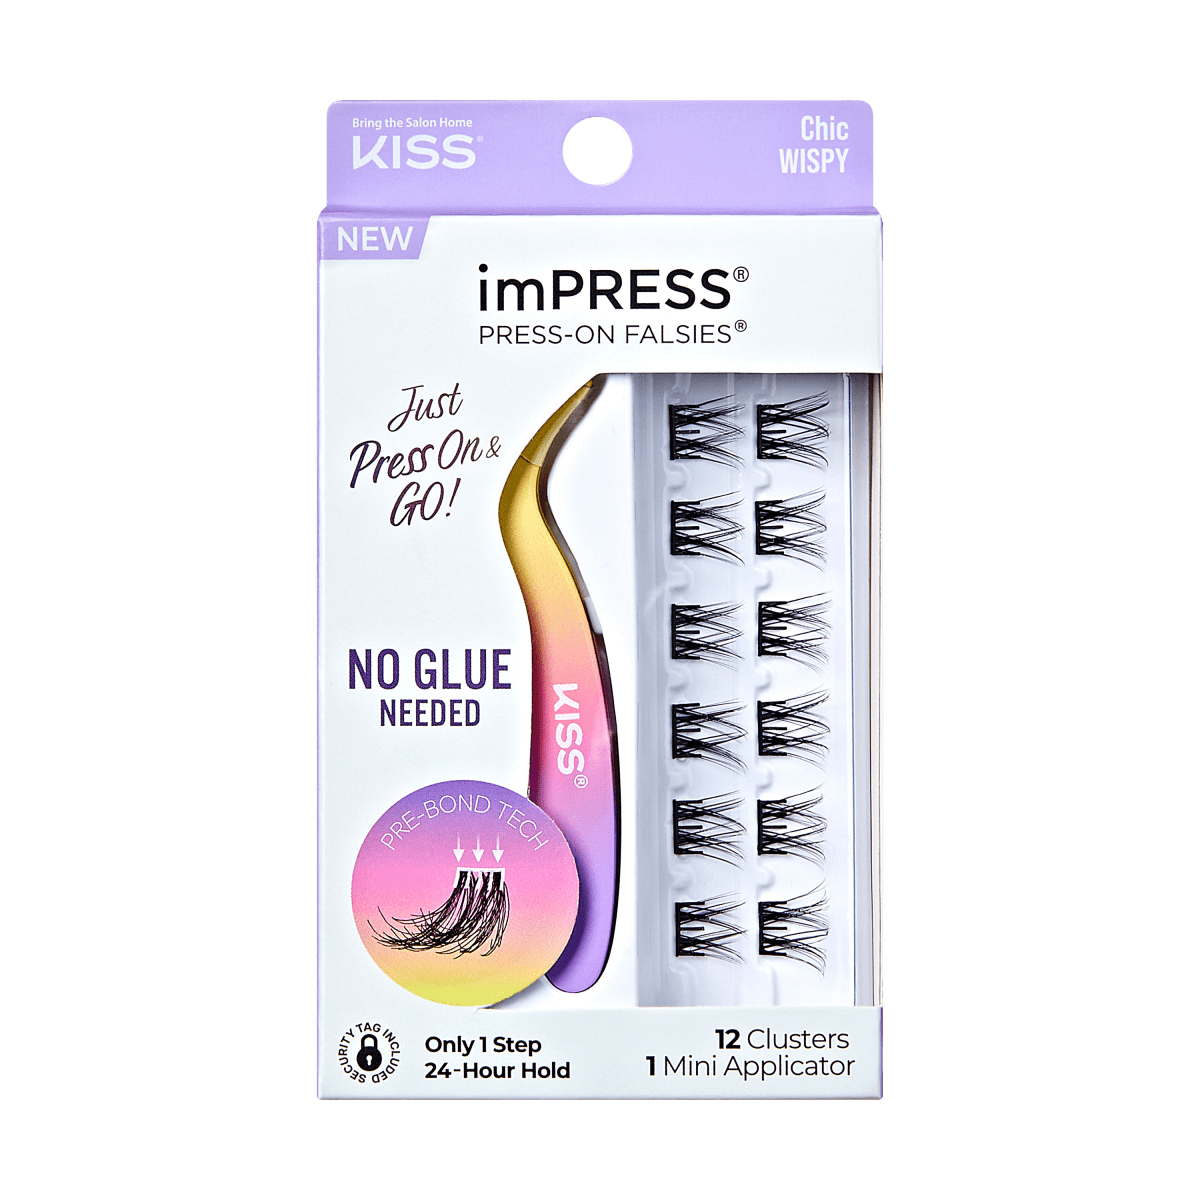 imPRESS Press-On Falsies Minipack, 12 Clusters + Applicator - Chic